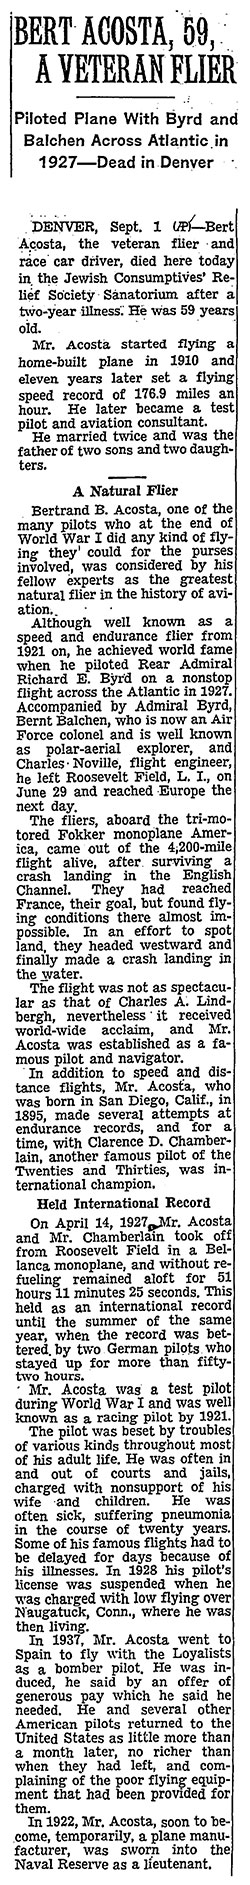 Bert Acosta Obituary, The New York Times, September 2, 1954 (Source: NYT)